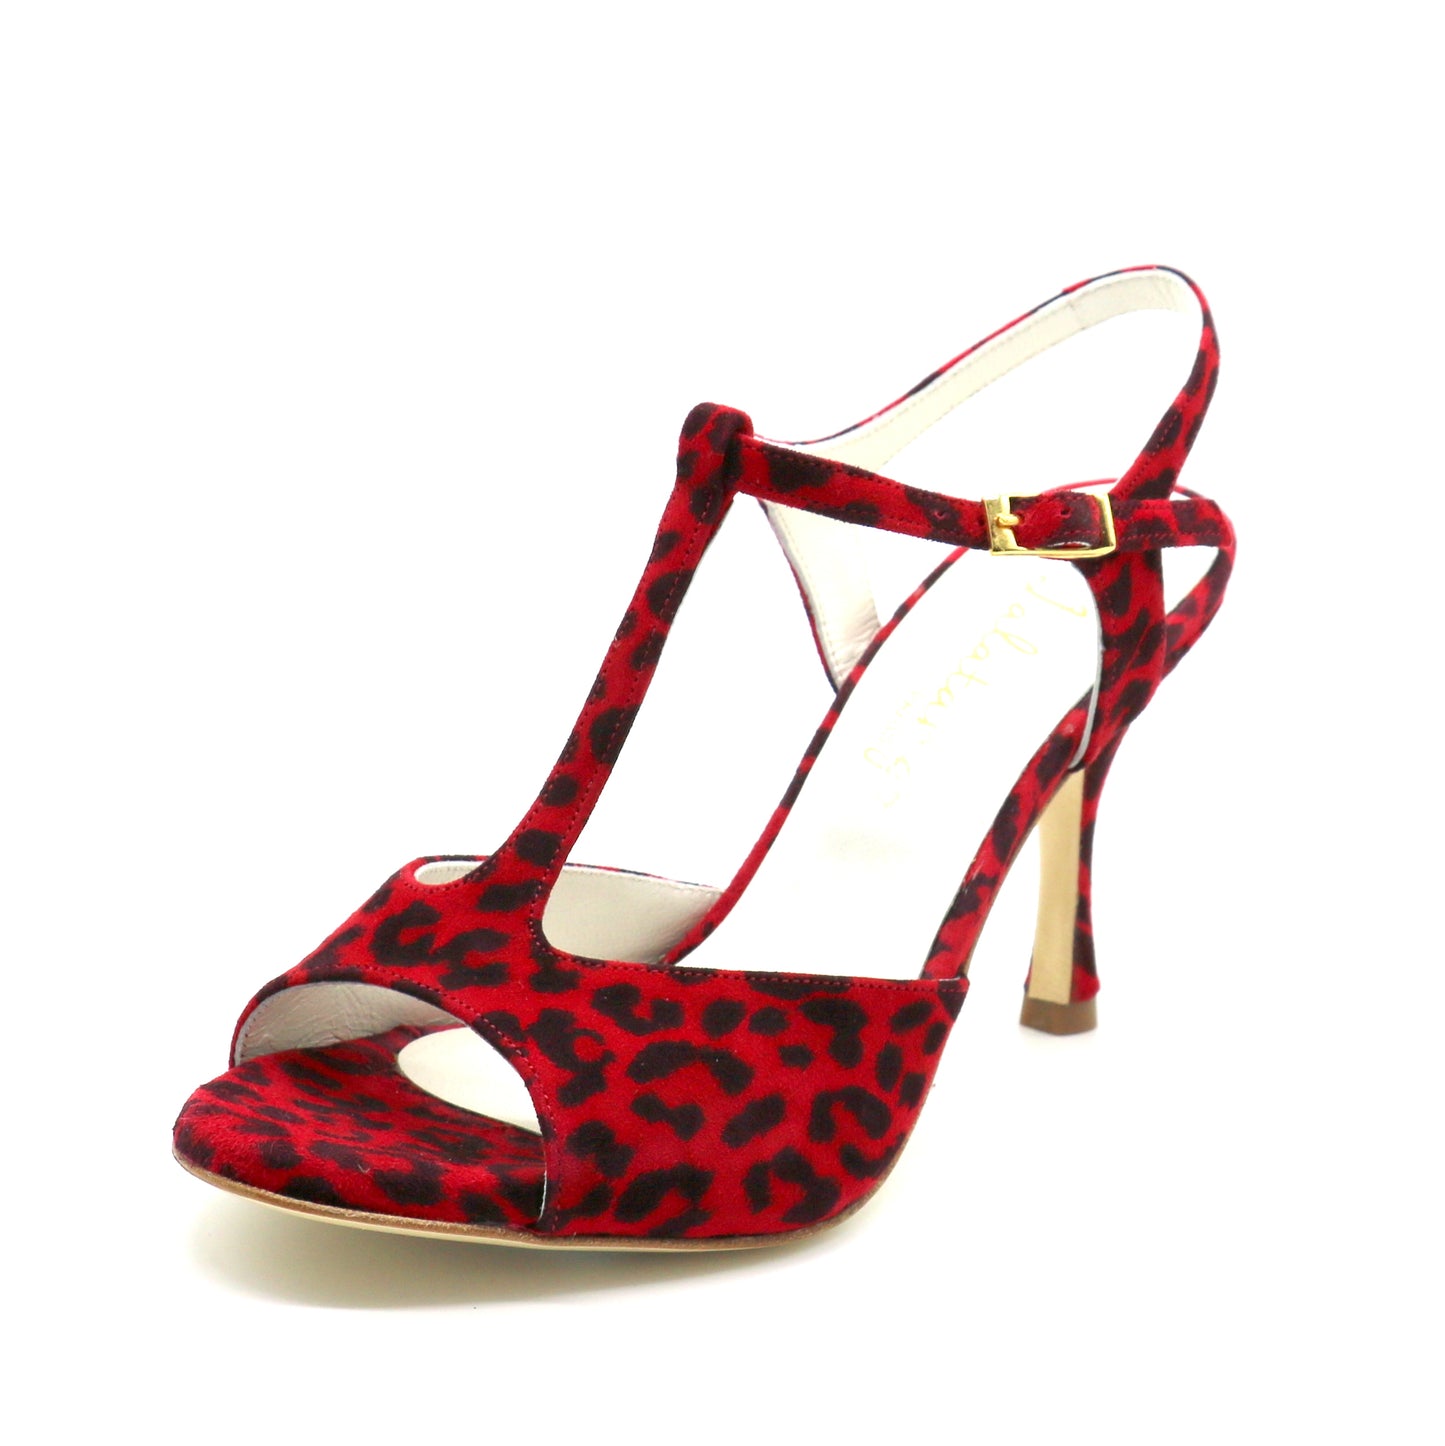 Sencillo Leopard Red and Black heels 8cm